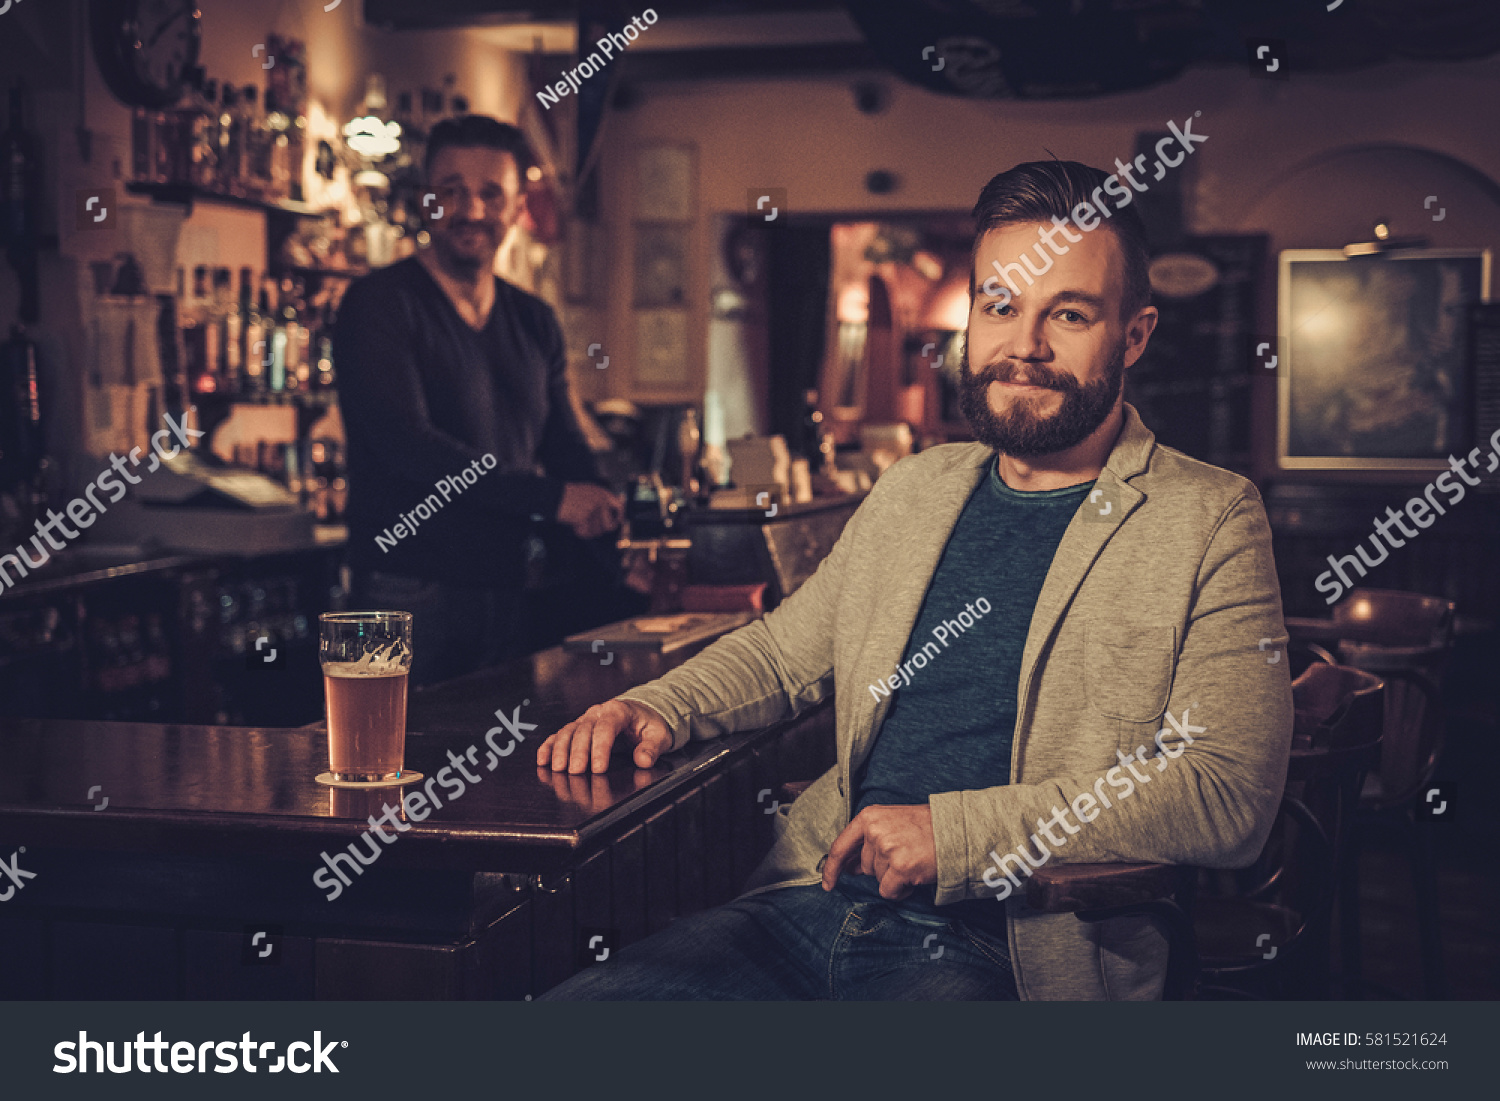 Stylish Man Sitting Alone Bar Counter Stock Photo 581521624 | Shutterstock